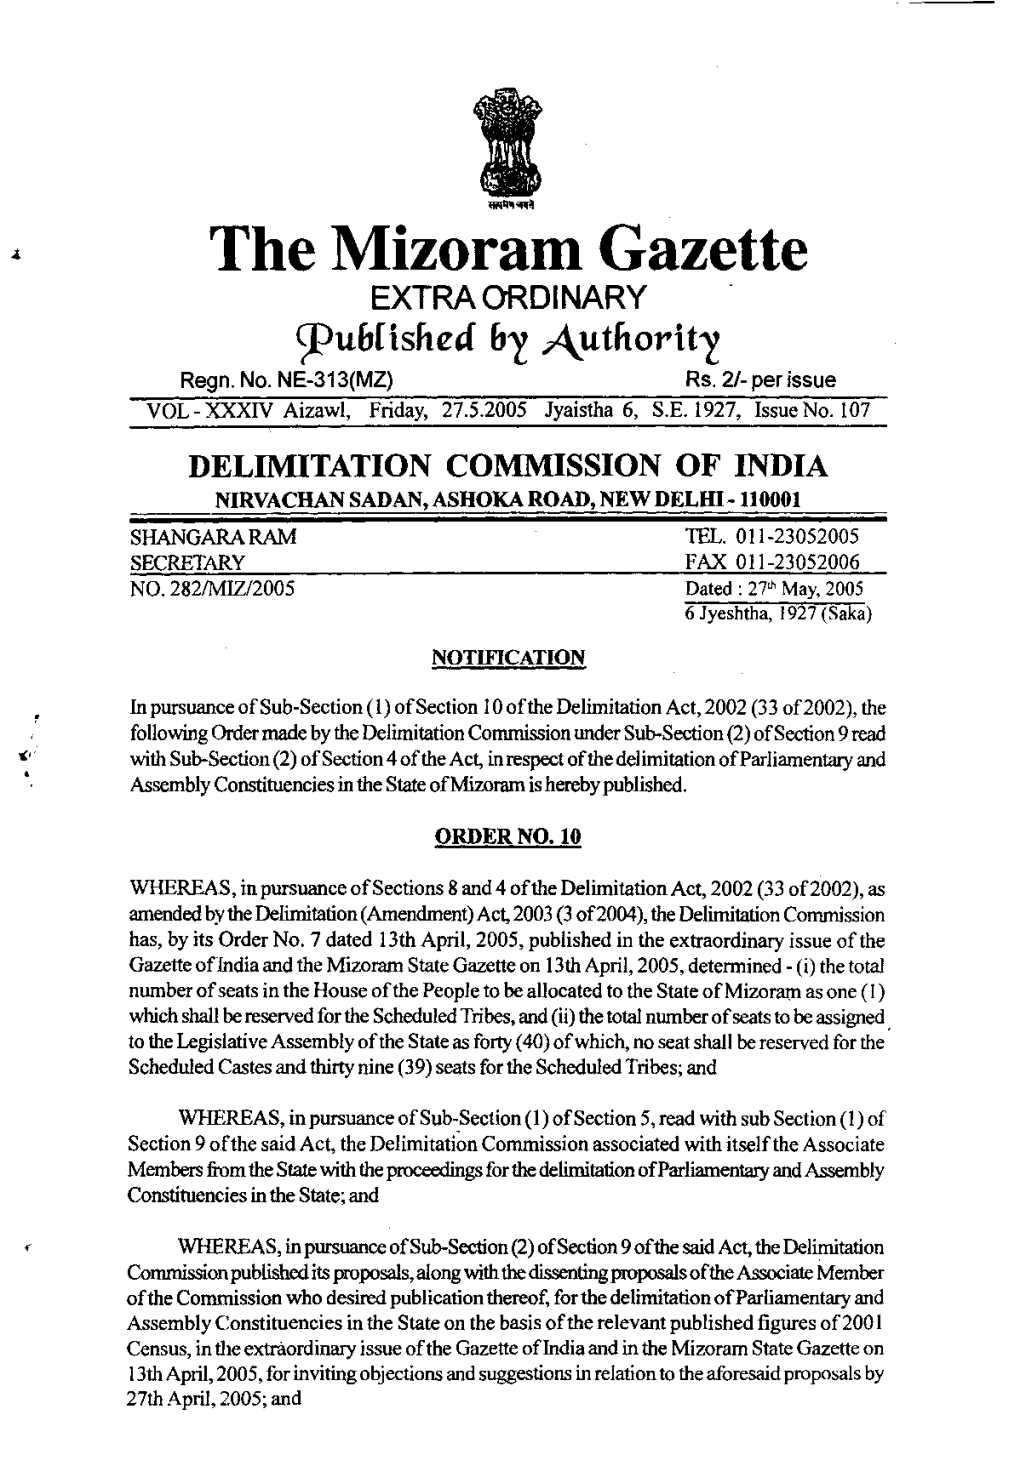 DELIMITATION COMMISSION of INDIA NIRVACHAN SADAN, ASHOKA ROAD, NEW DELID-110001 SHANGARARAM Lel